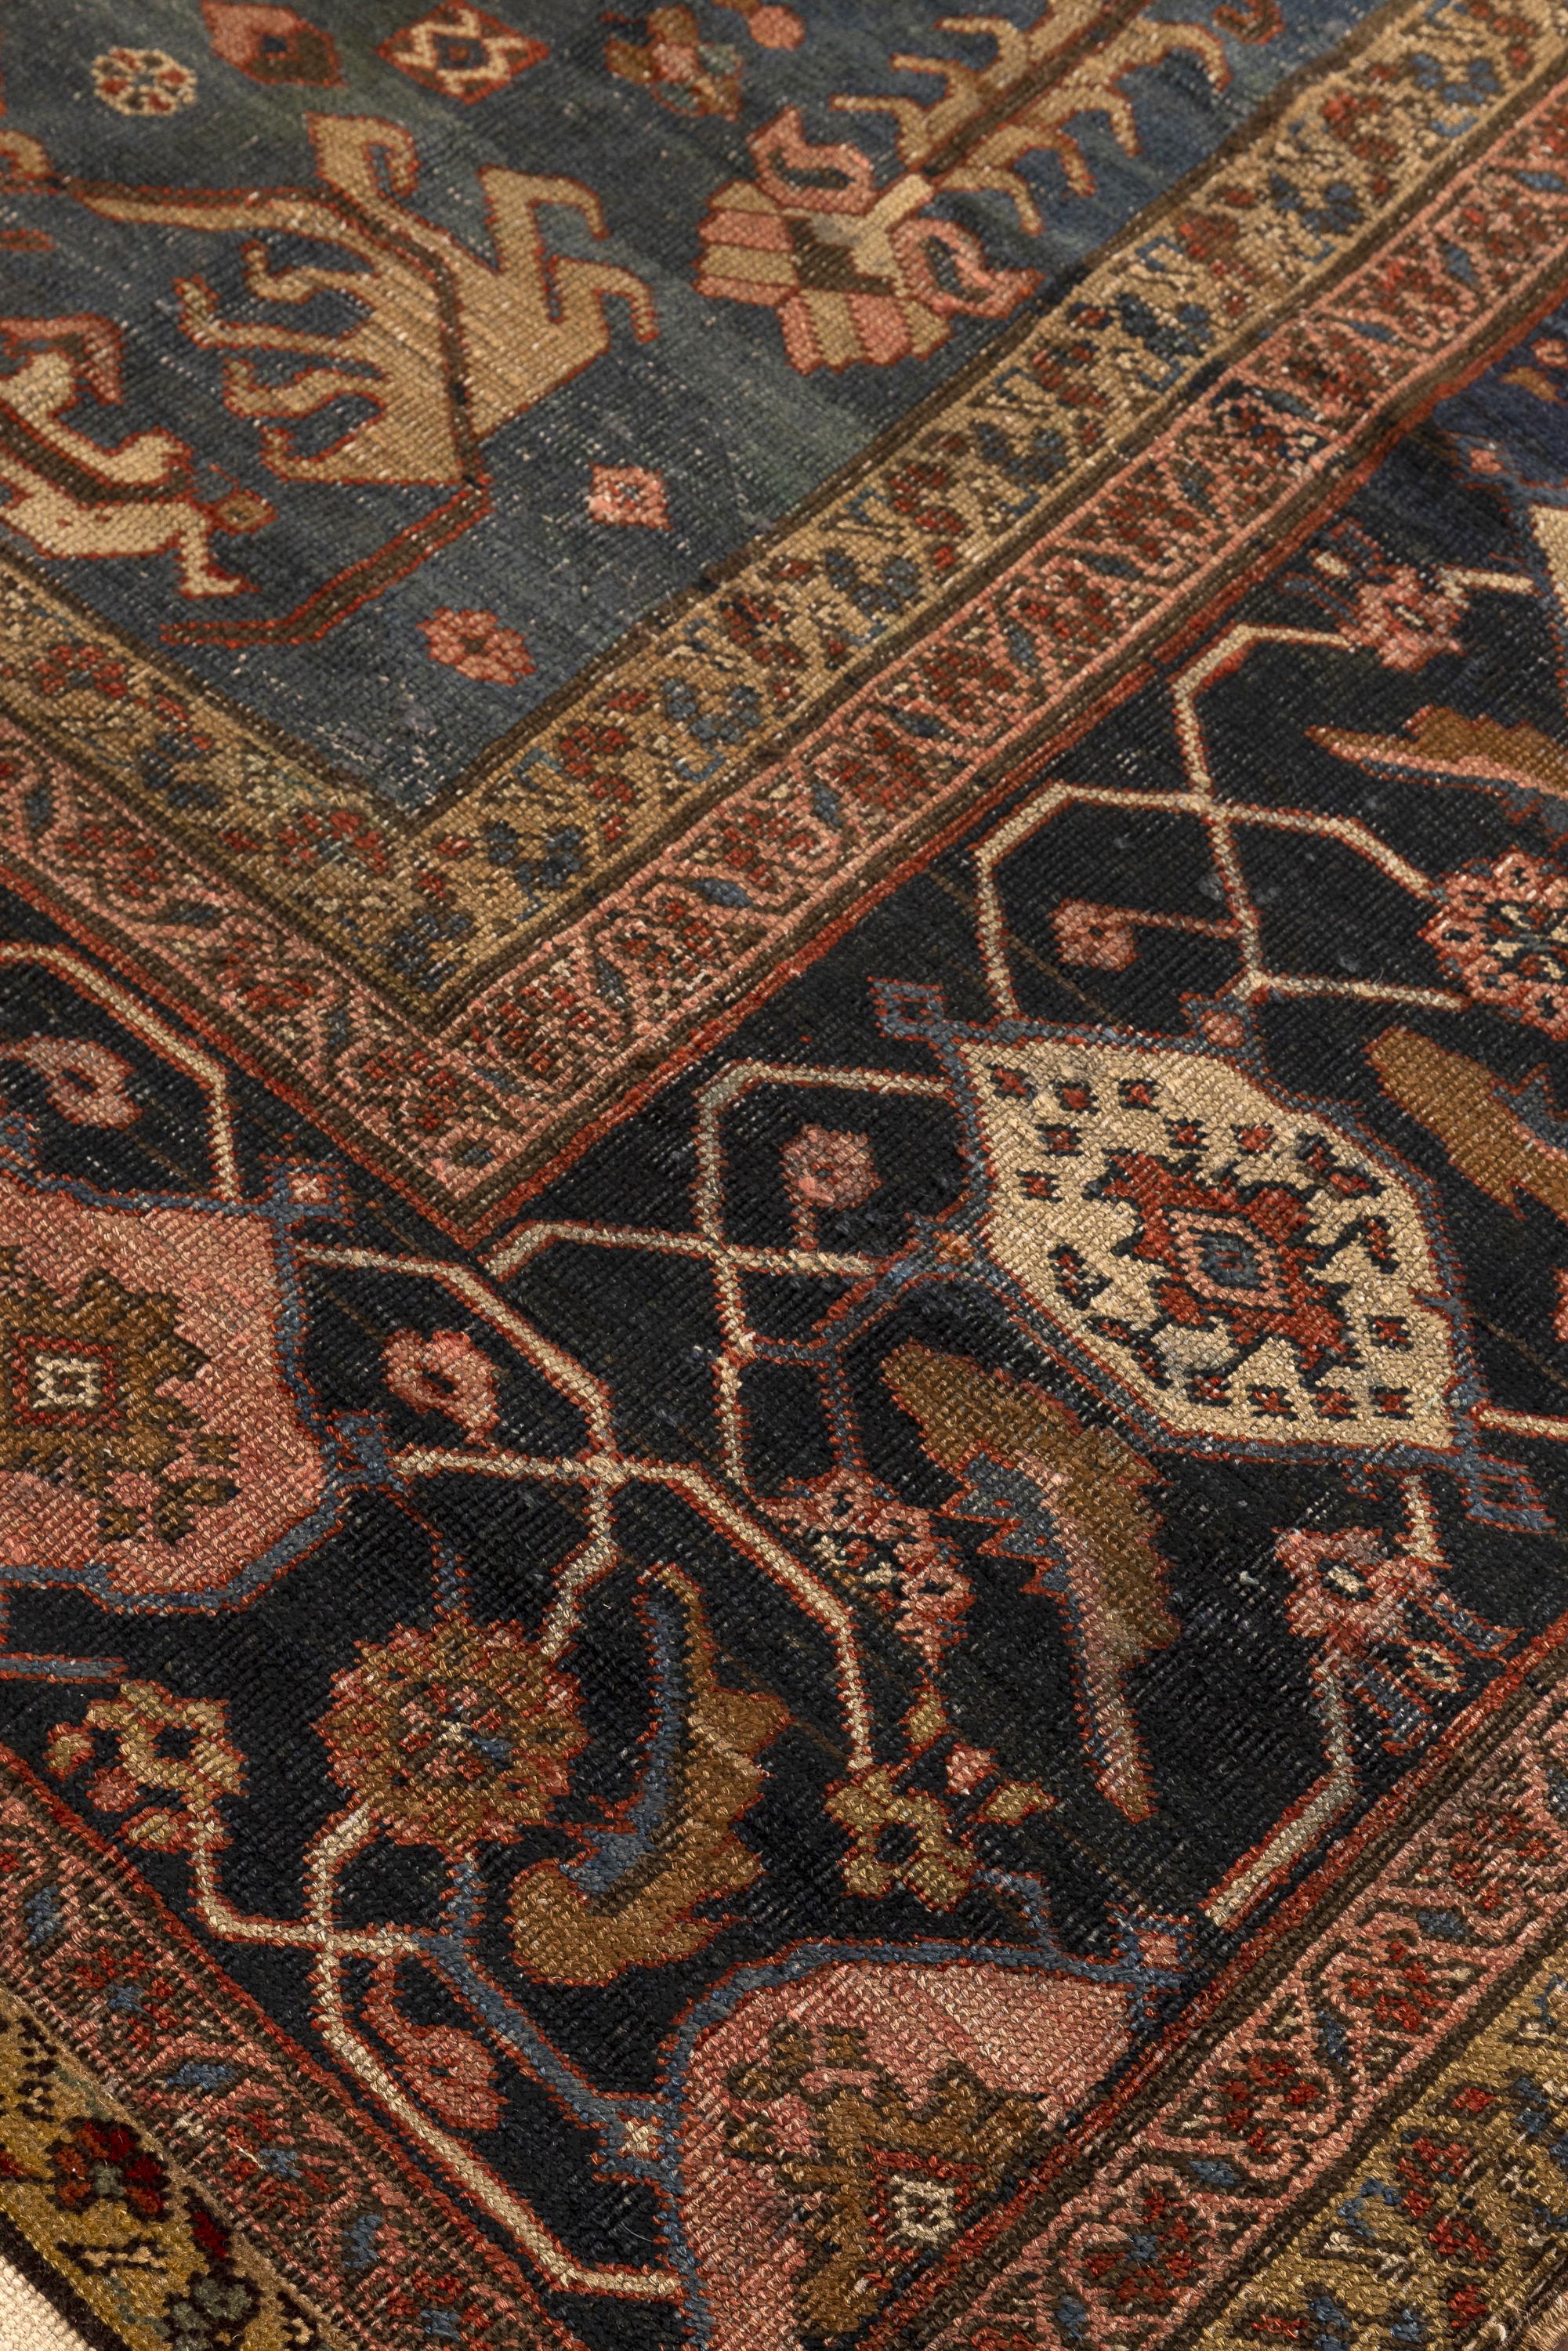 19th Century Antique Persian Serapi Palatial Size Carpet For Sale 4